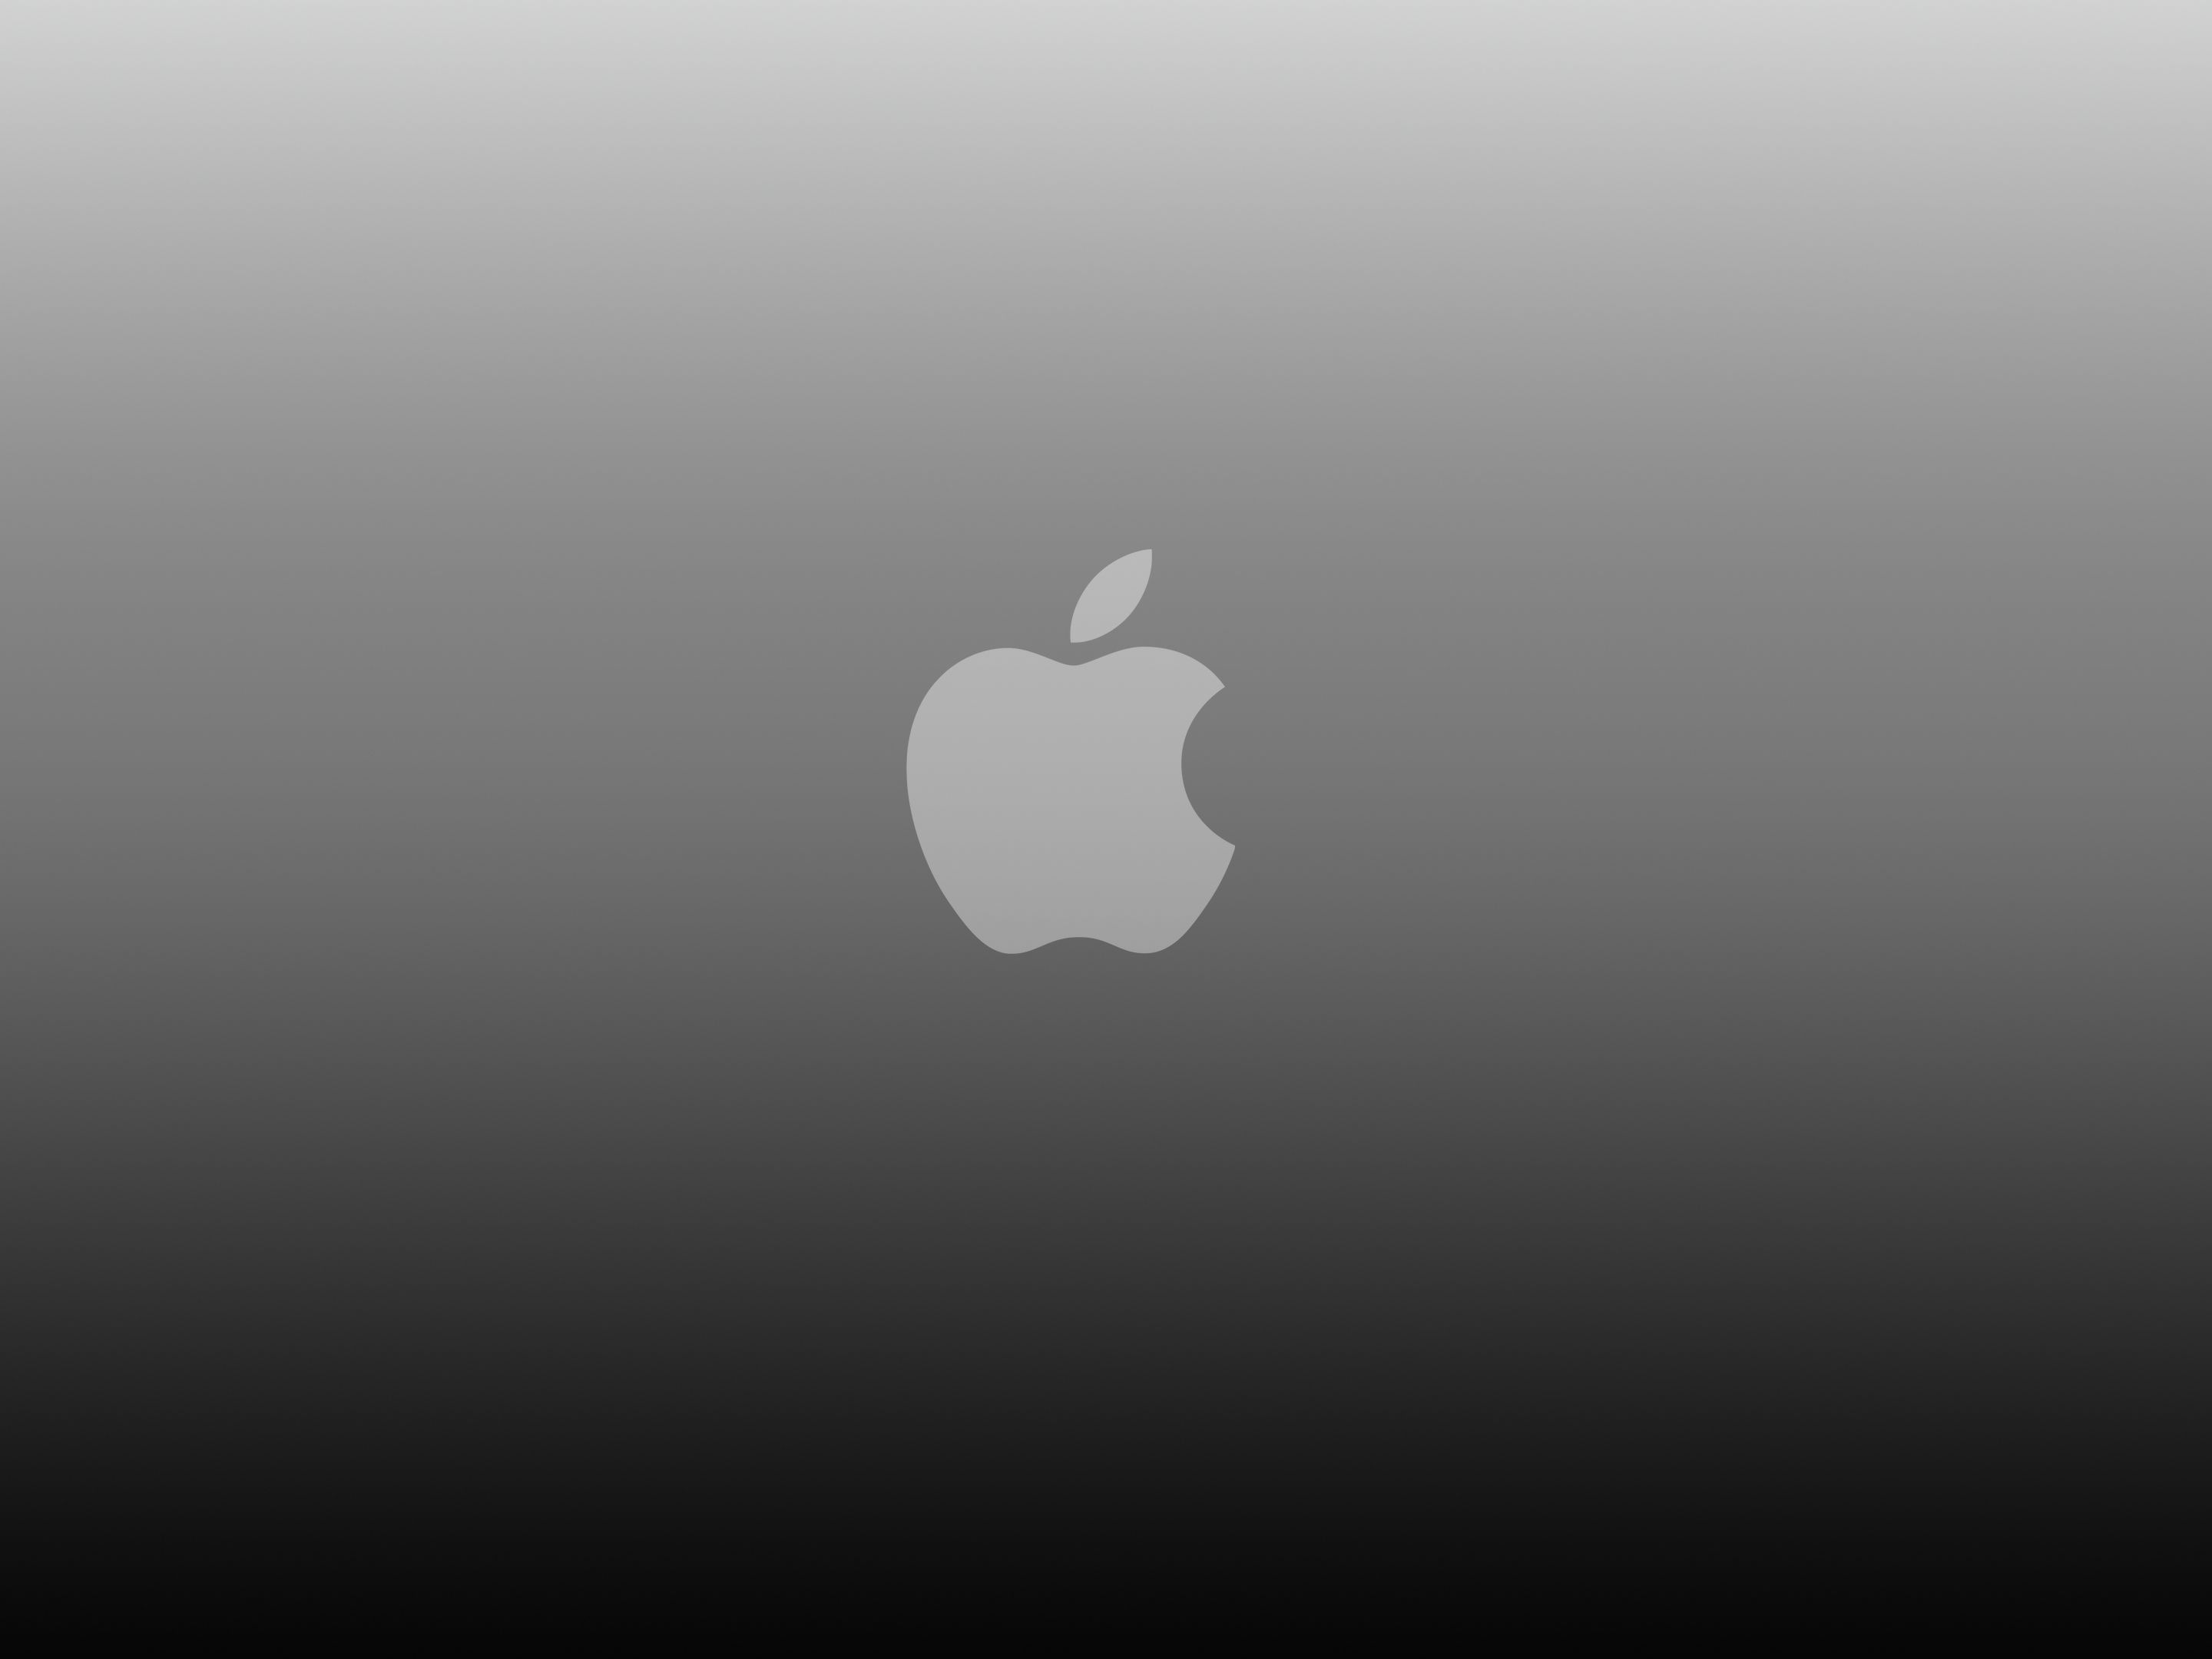 Greyscale apple logo wallpaper